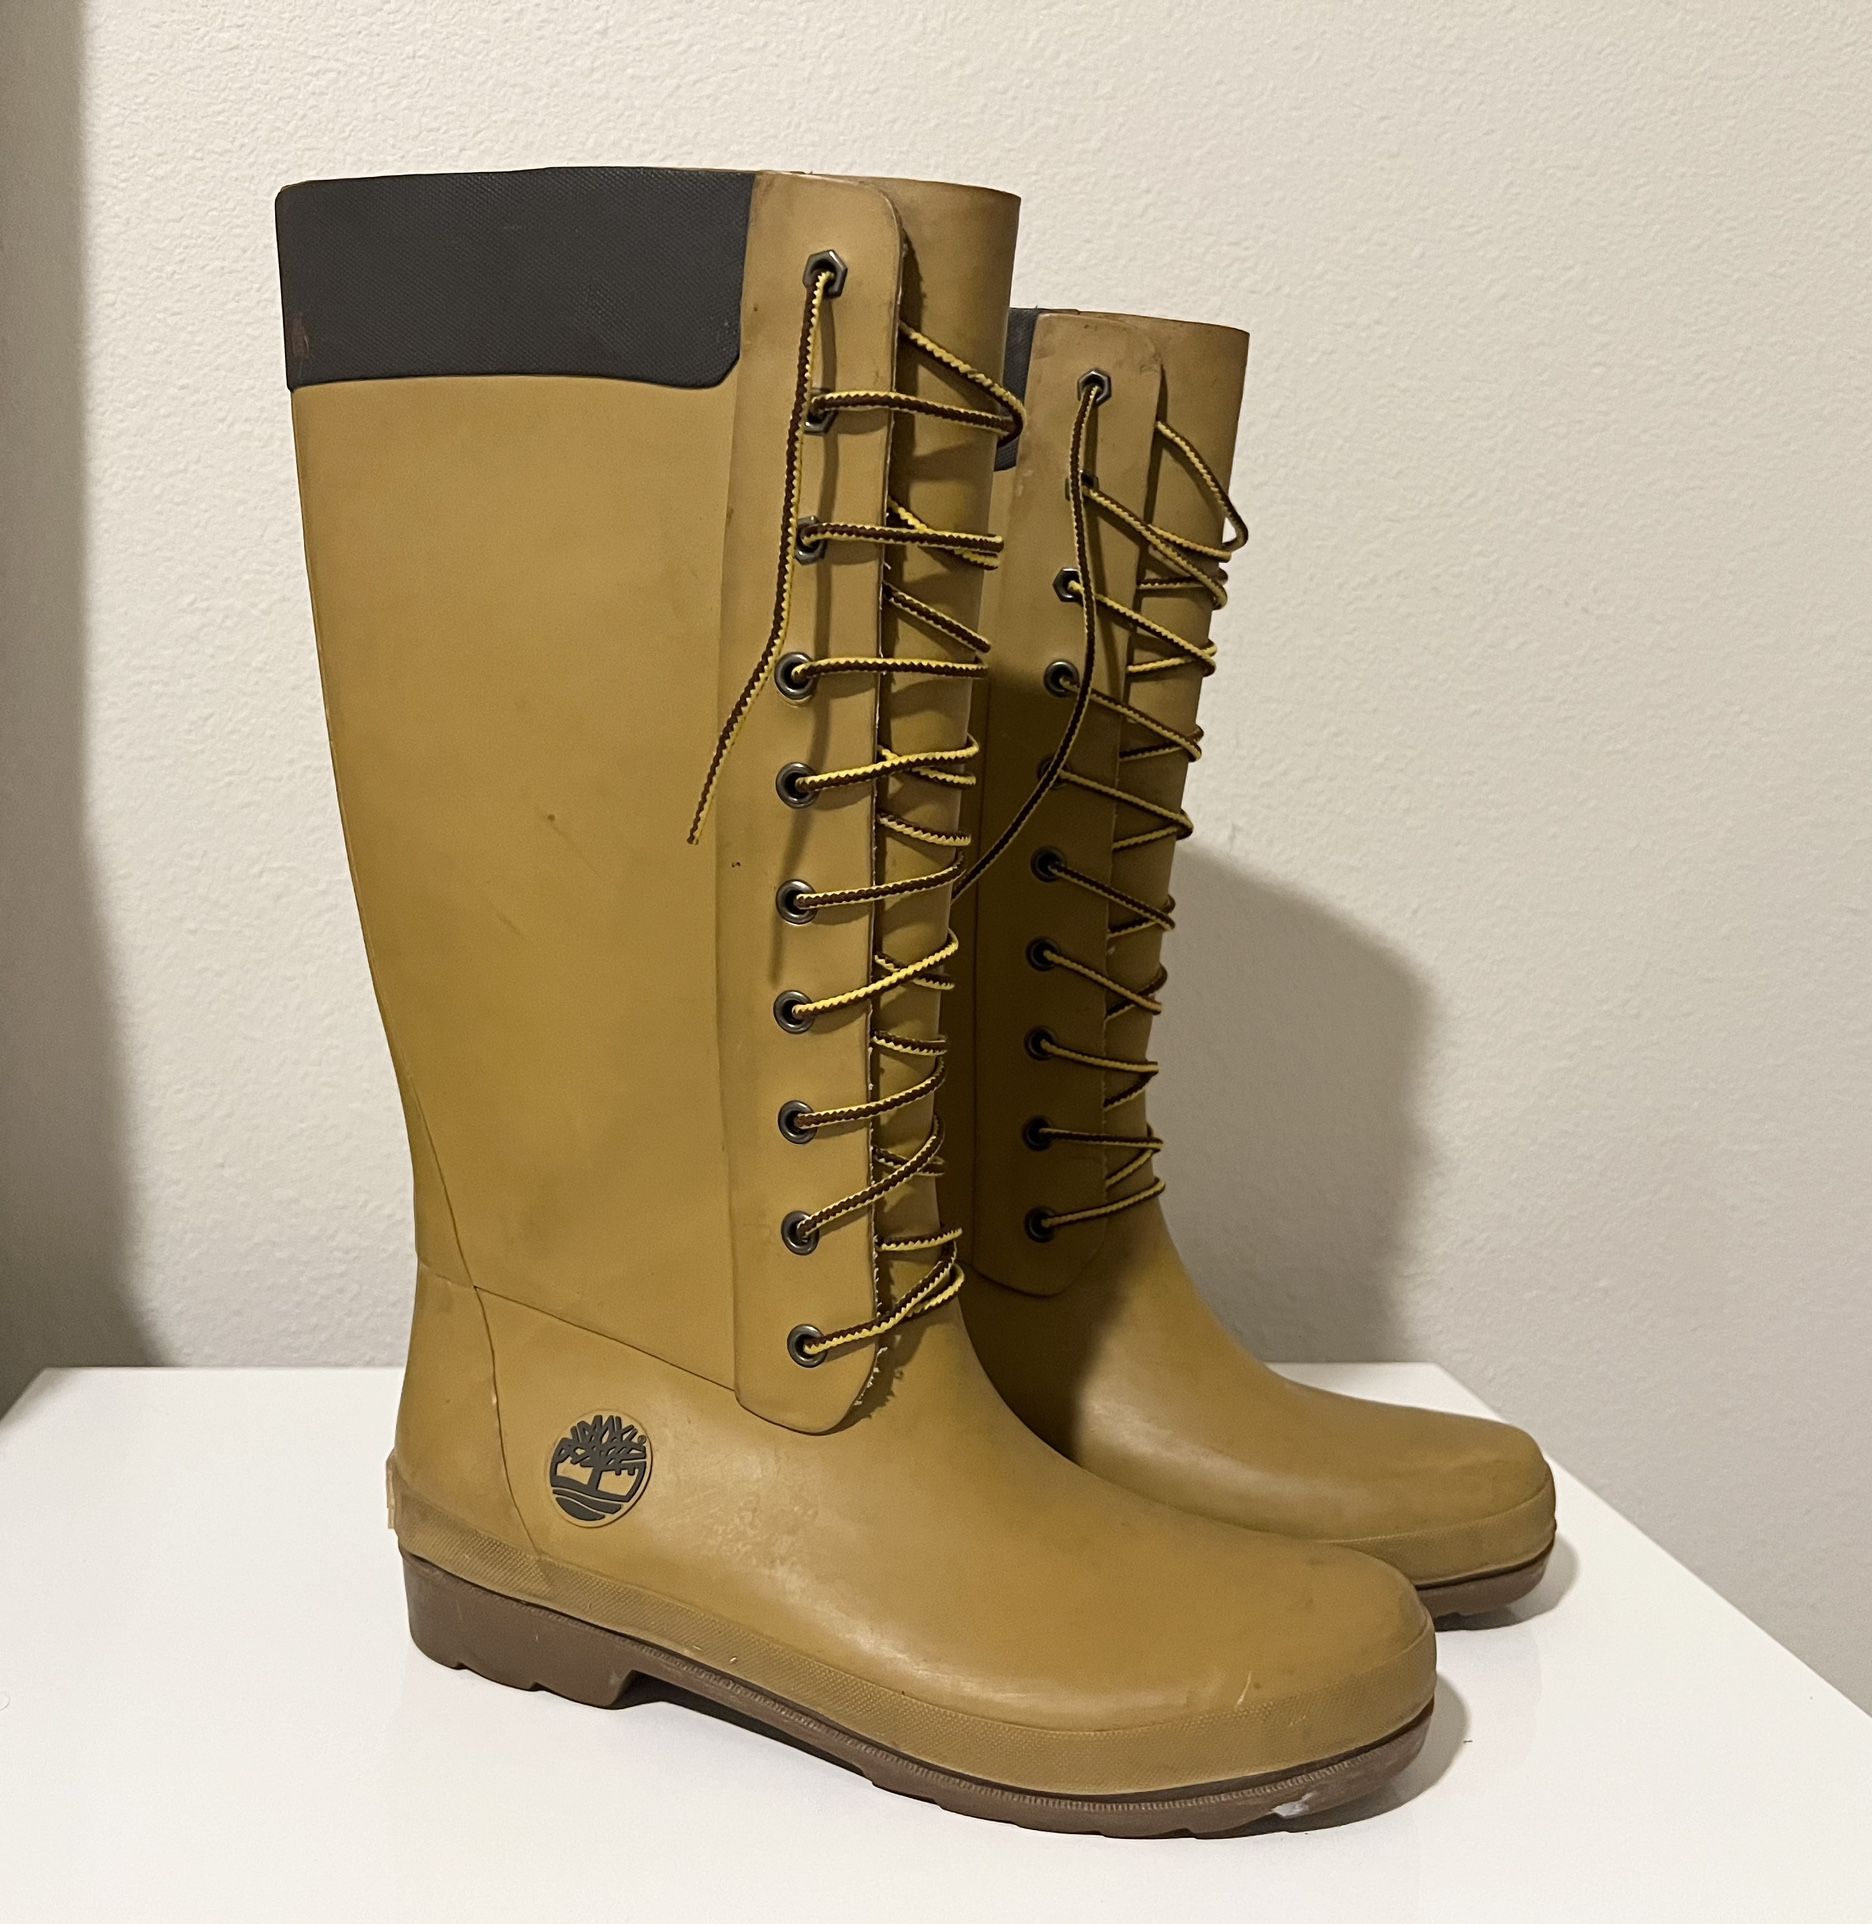 Timberland 14" Tall Rubber Rain Boots Womens Sz 8M Tan Yellow Lace Up